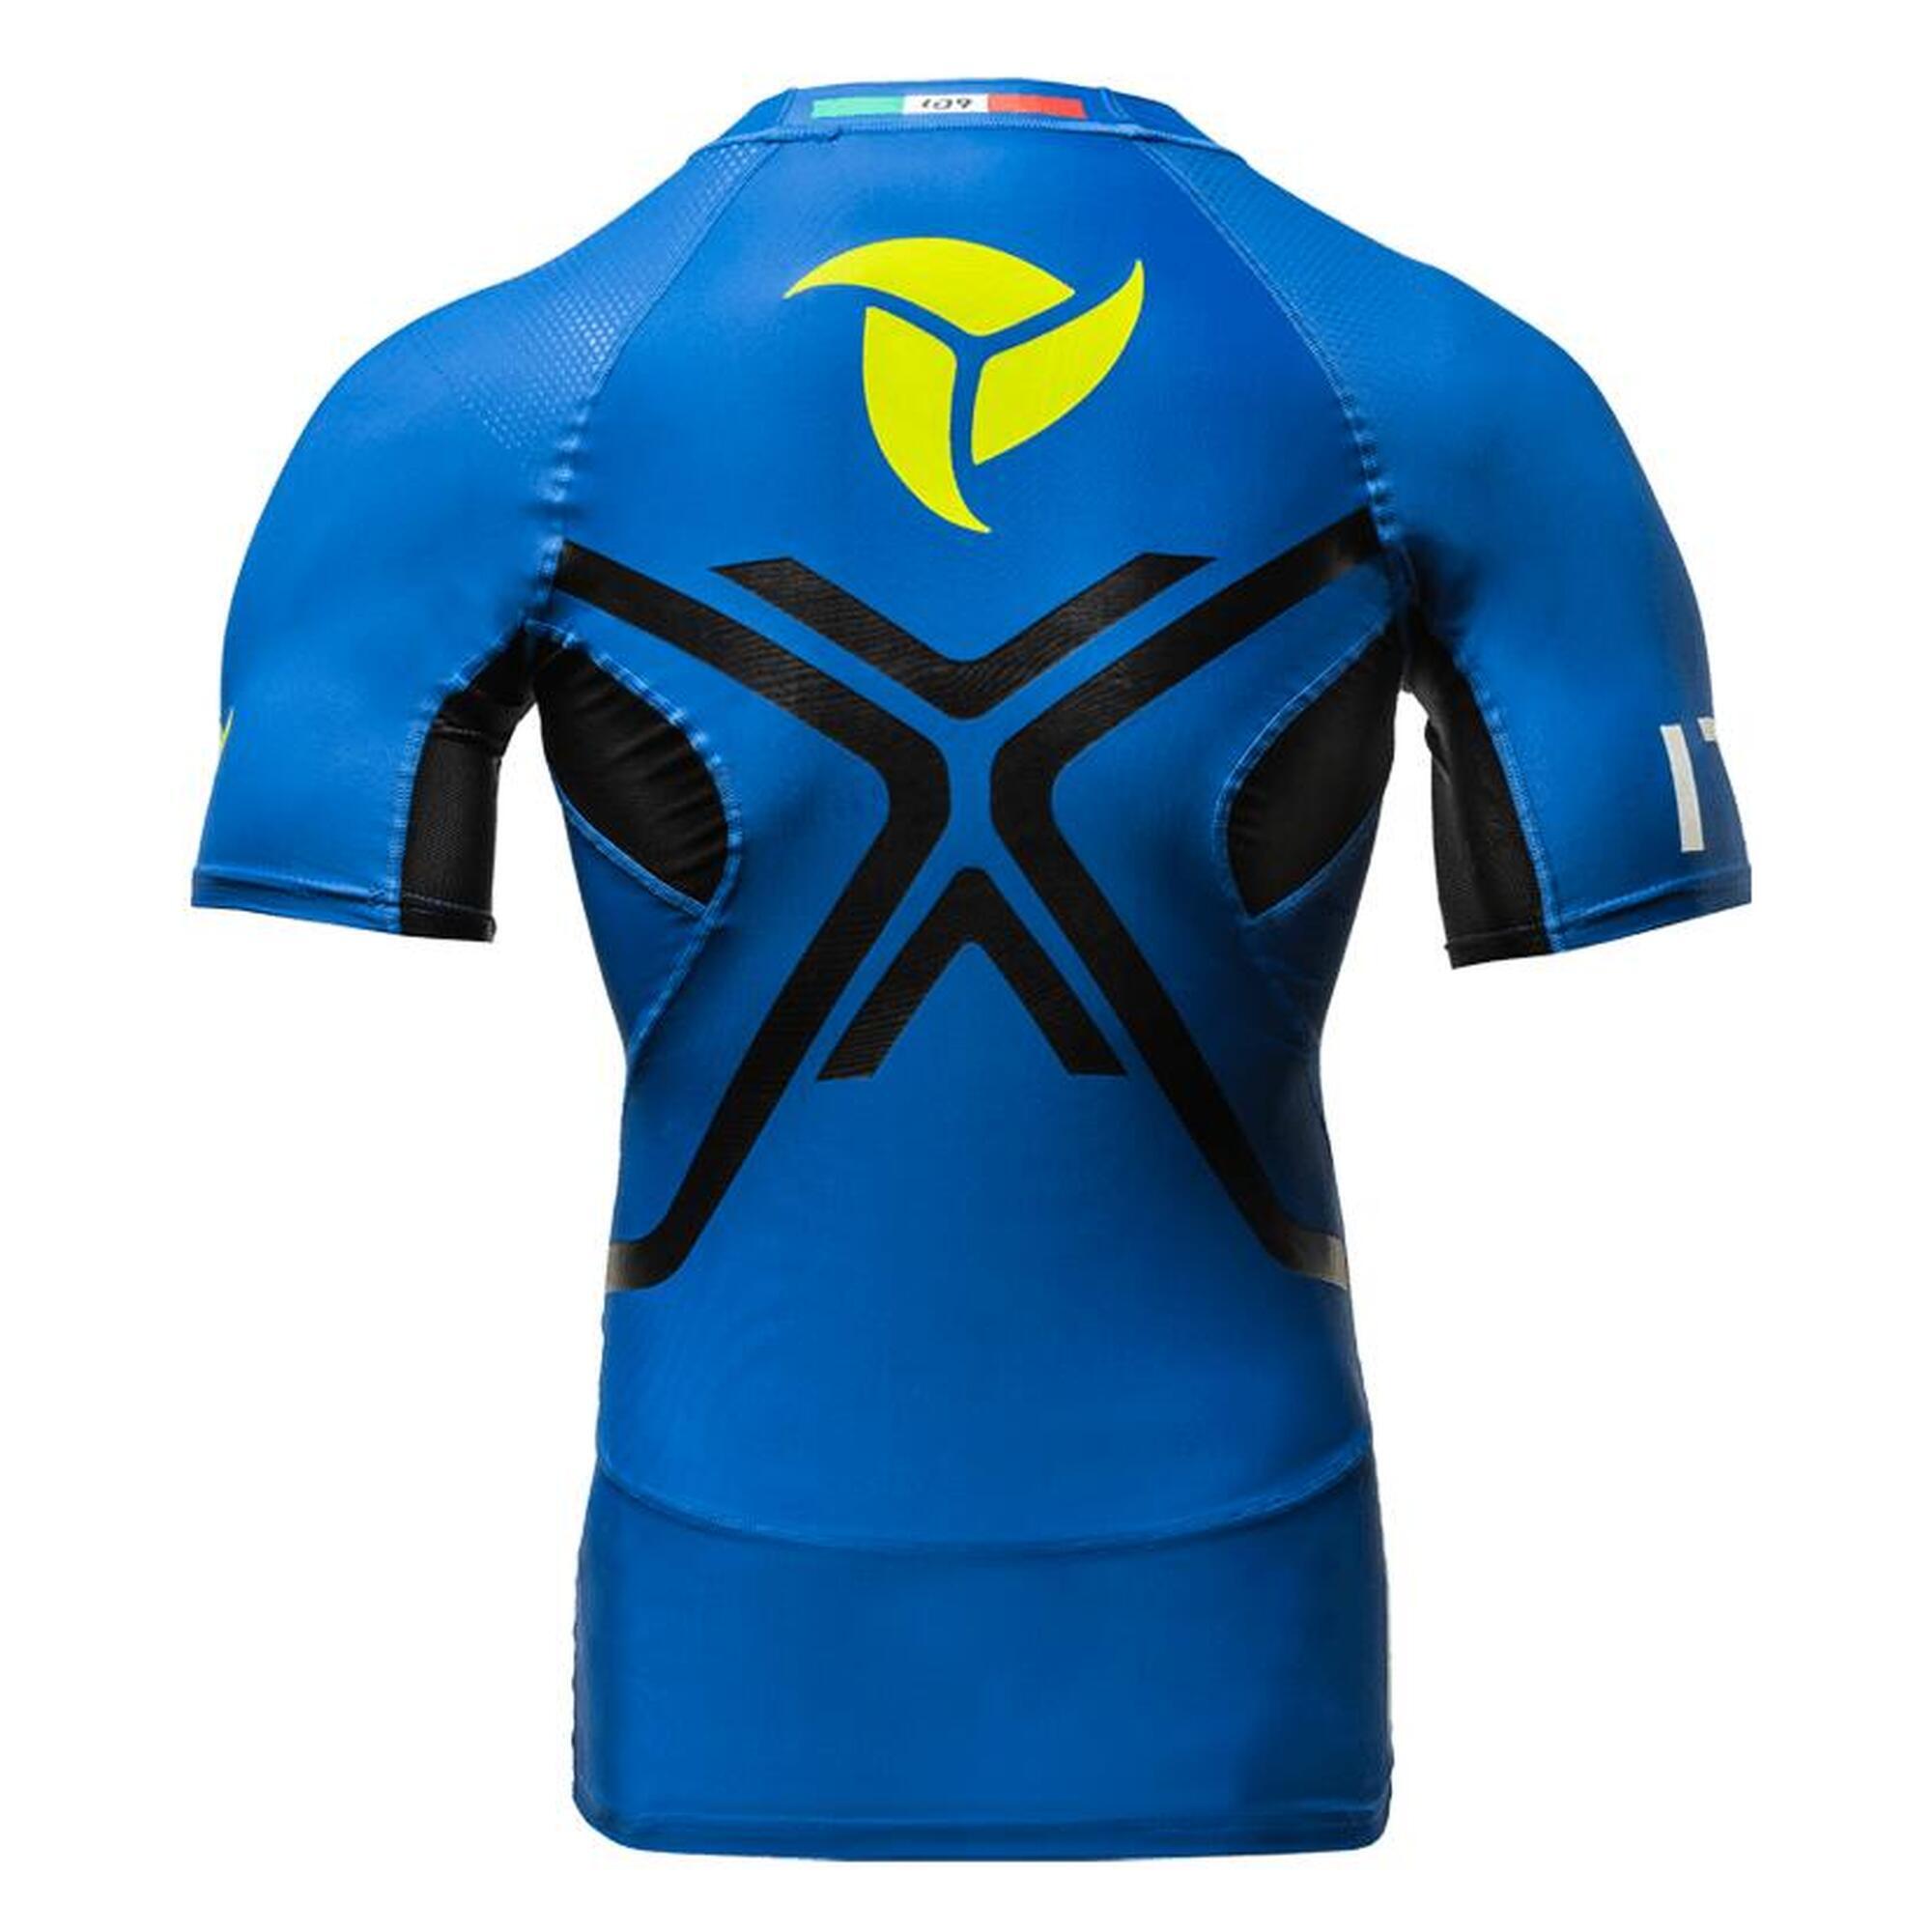 Camiseta Rashguard de Compresión anti-UV para piragüismo, kayak y SUP - Azul ITA